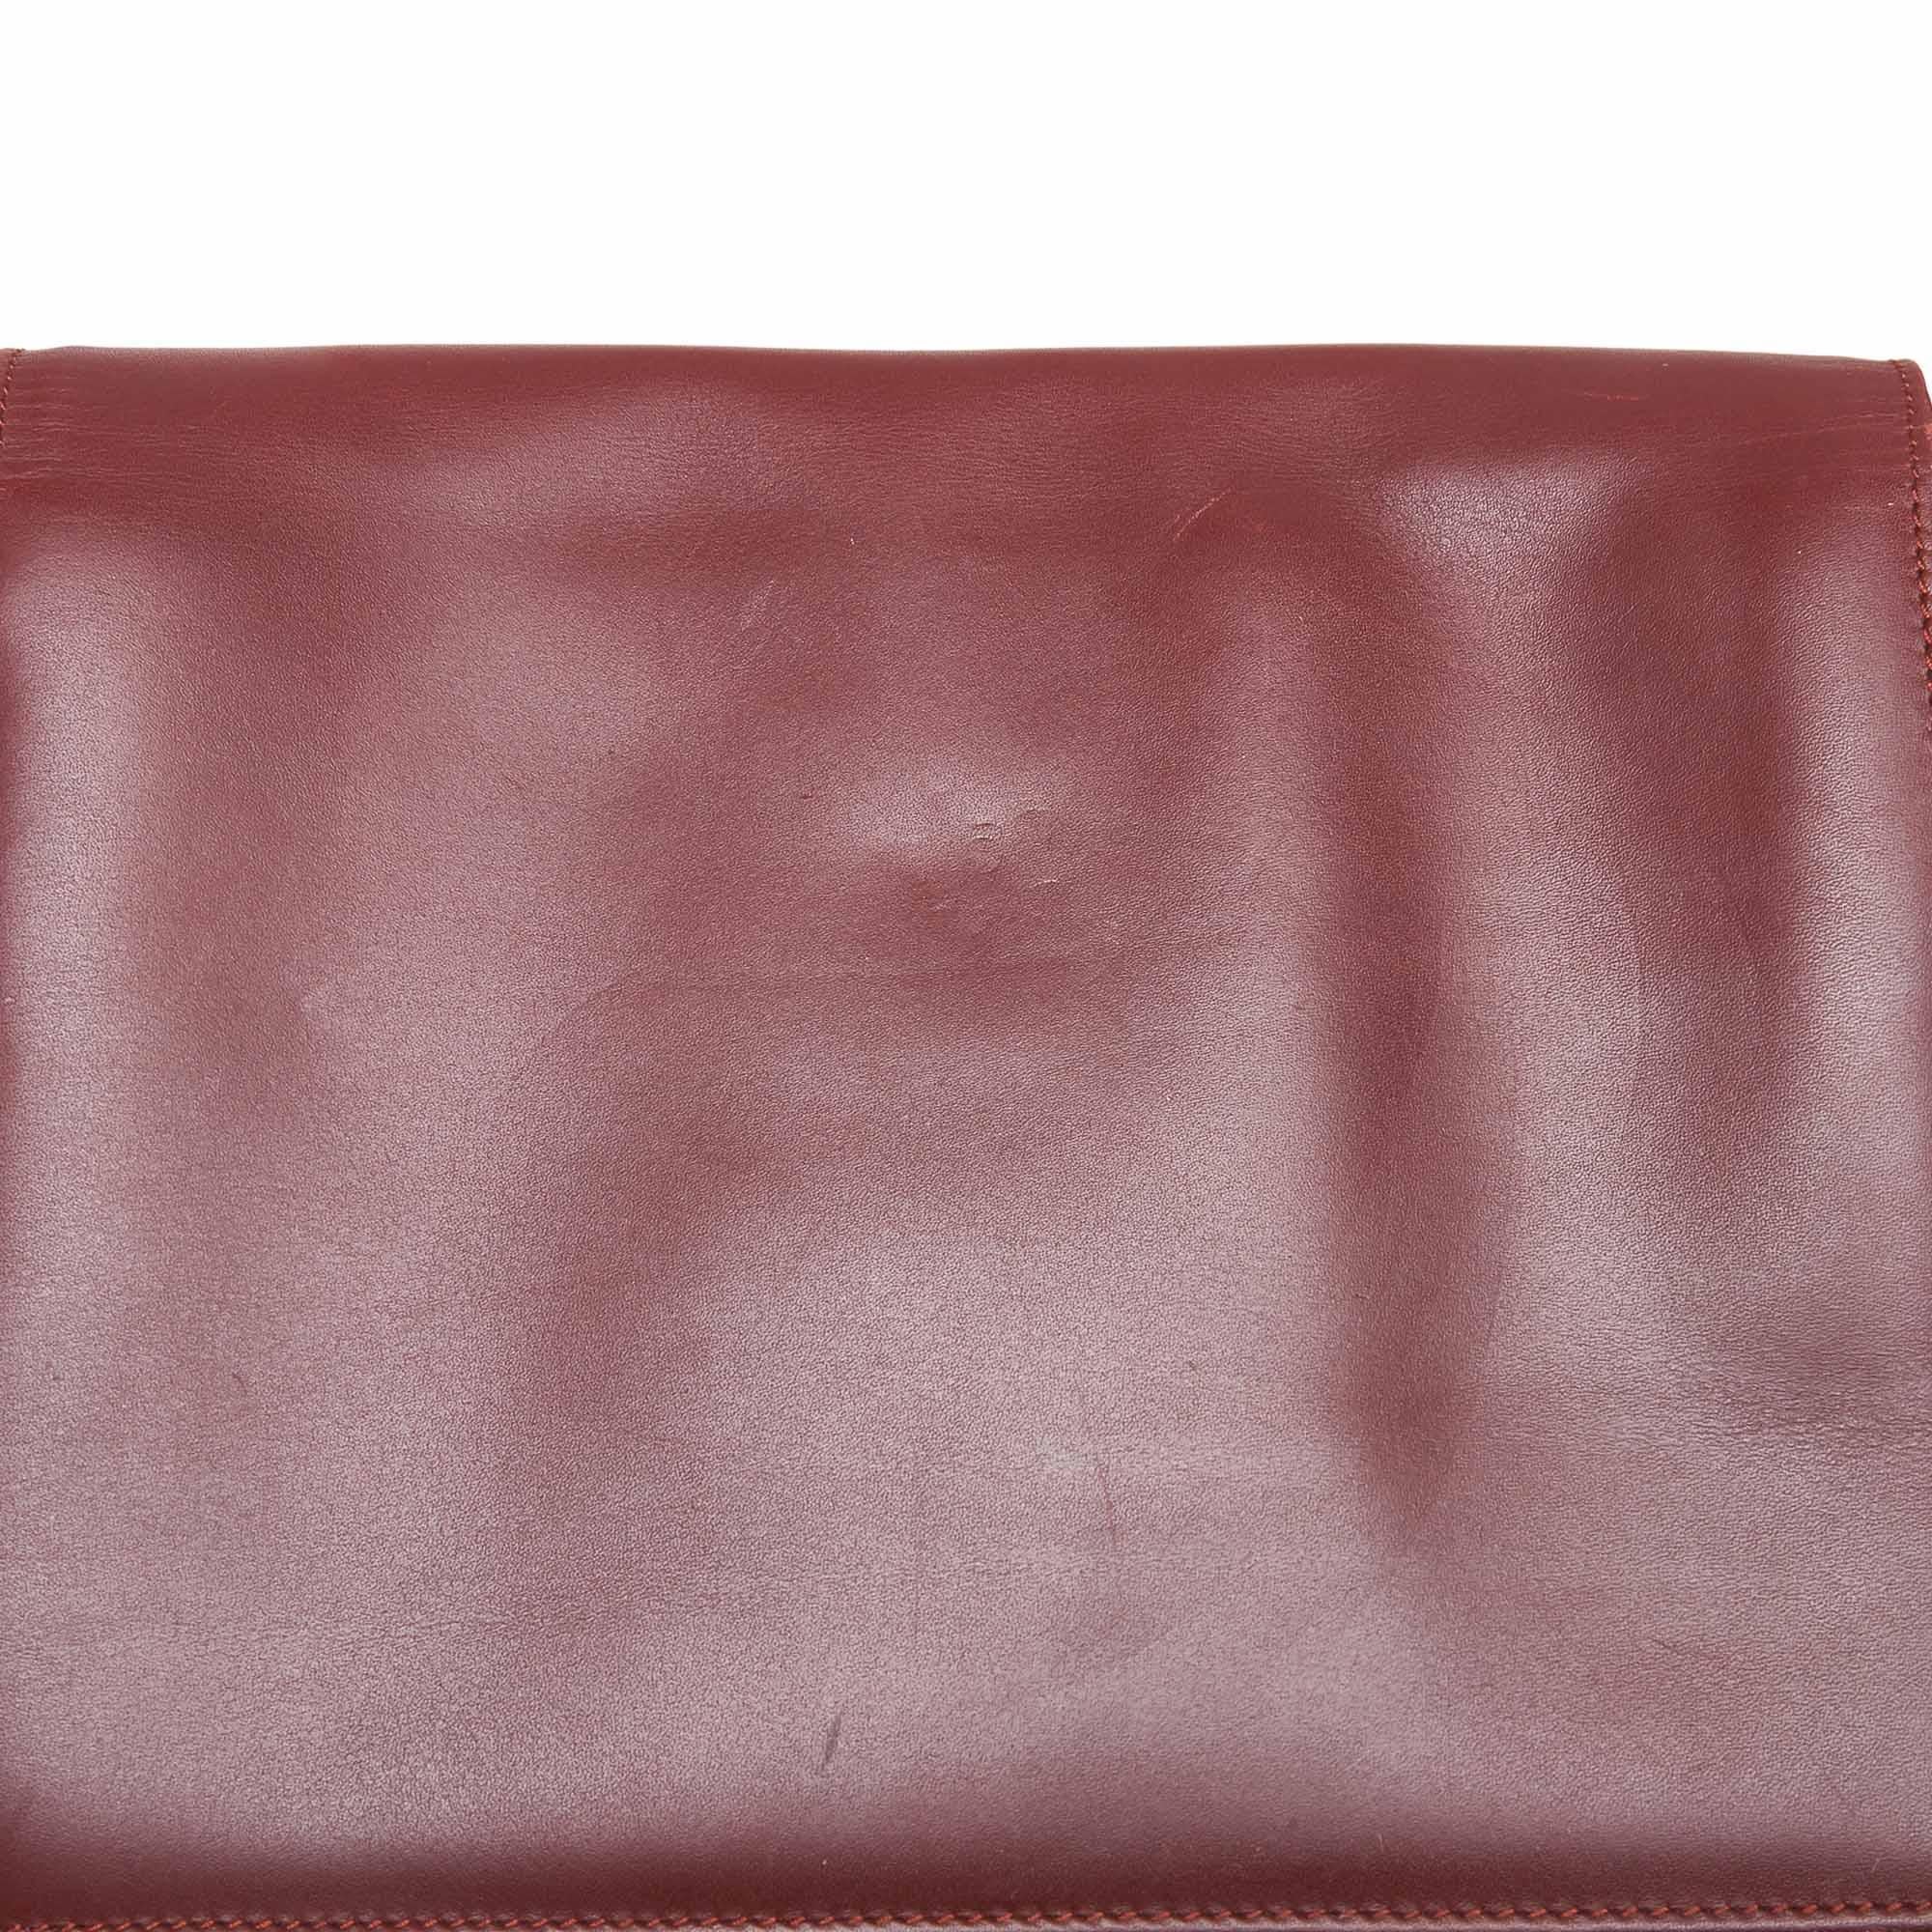 Vintage Authentic Cartier Red Leather Must de Cartier Shoulder Bag France SMALL  For Sale 3